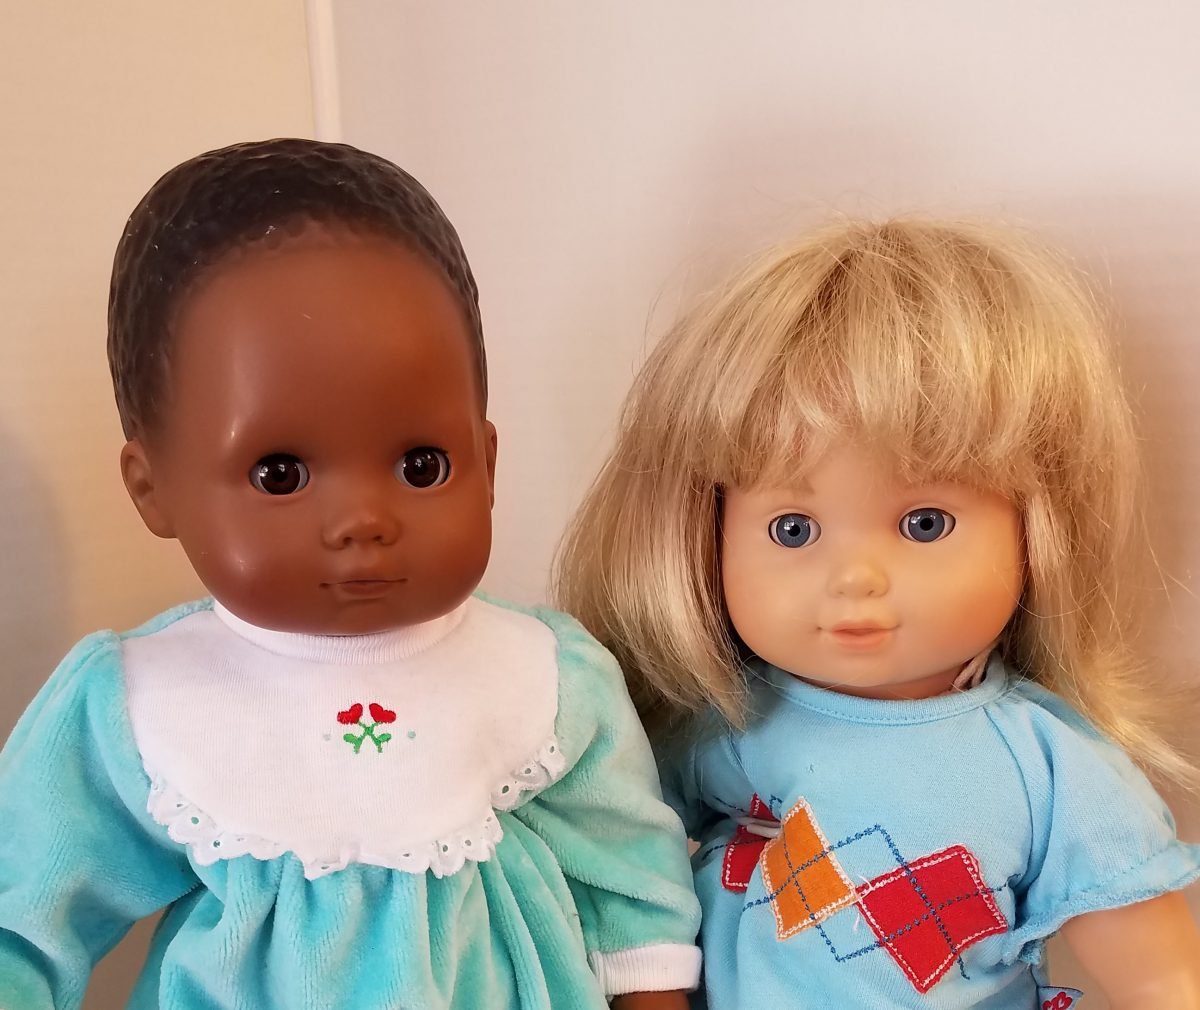 american girl doll bitty baby twins